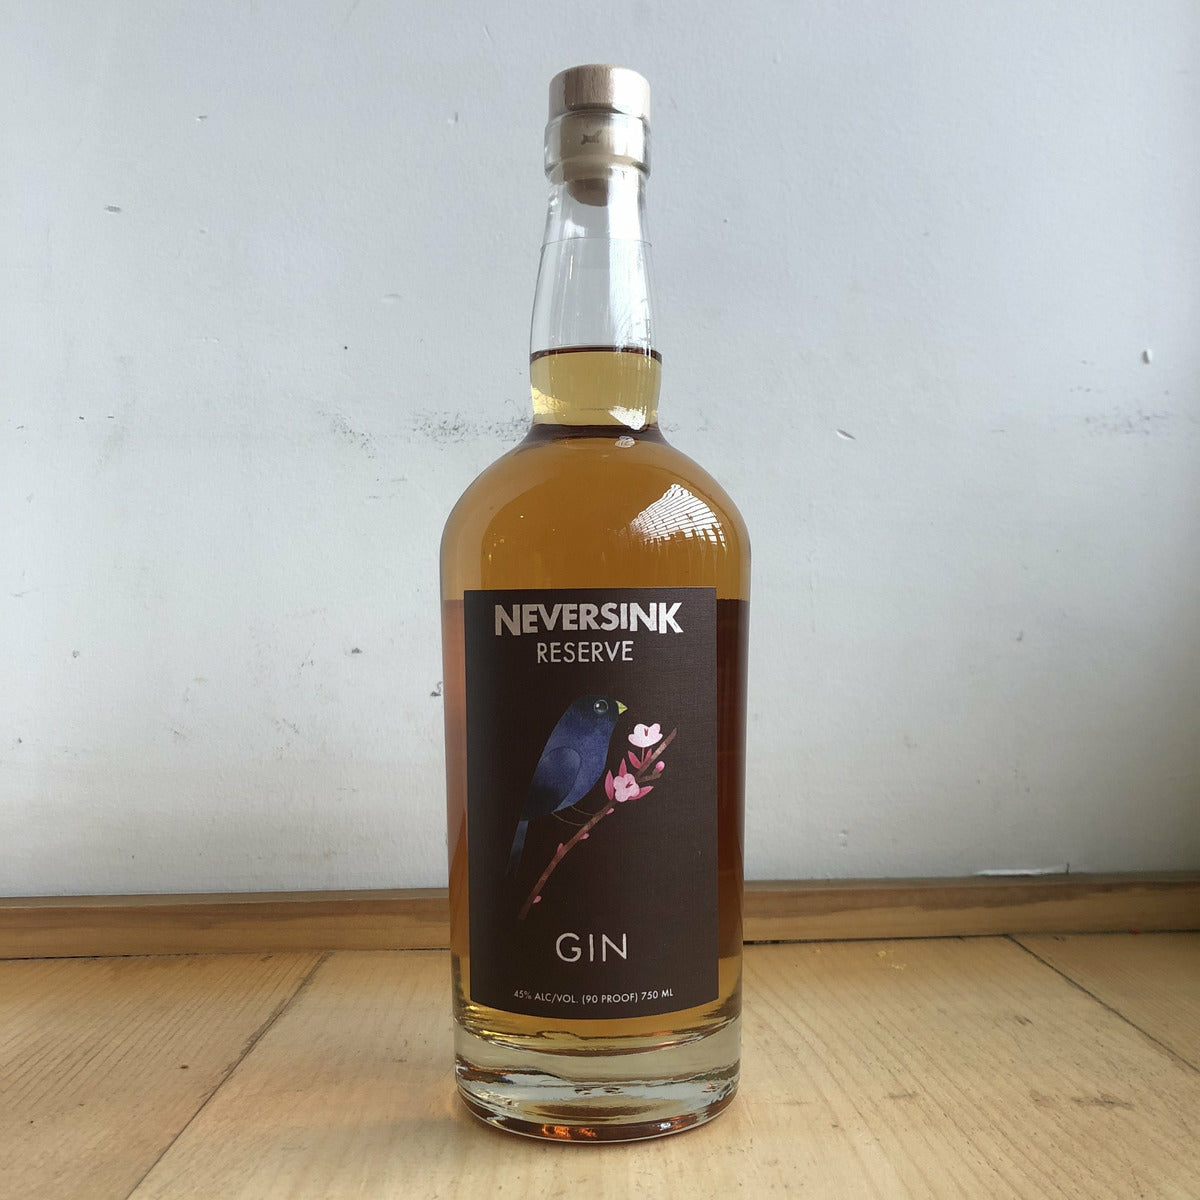 Neversink, "Reserve" Gin